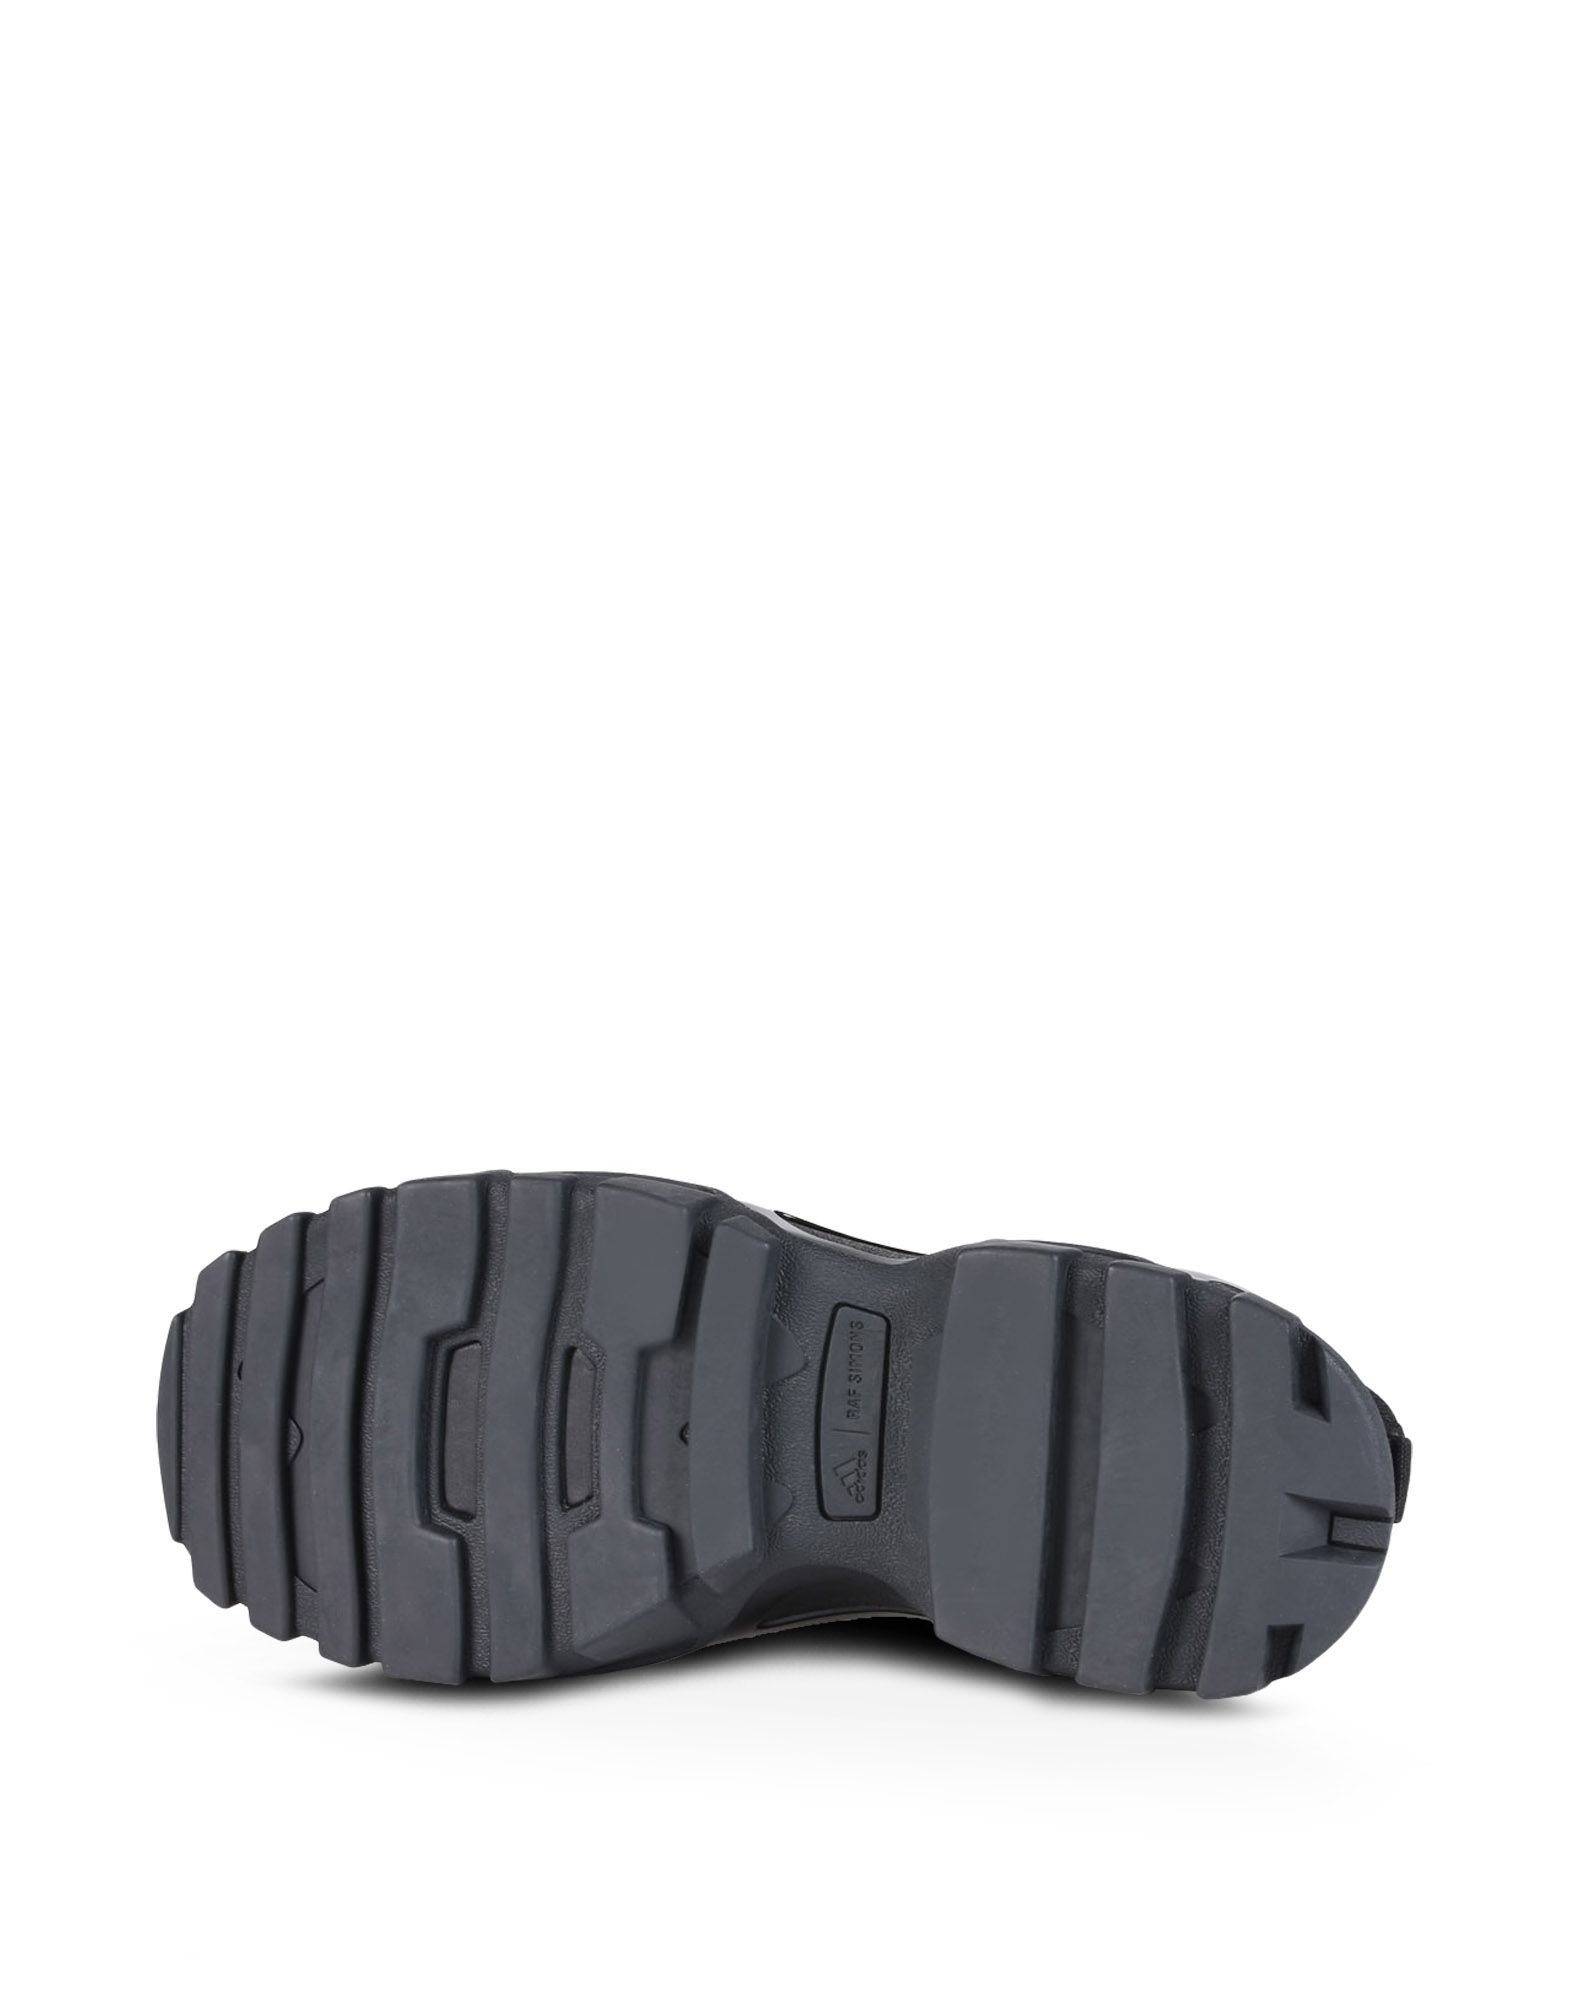 Raf Simons Detroit Runner Sneakers in Black | Adidas Y-3 Official Store